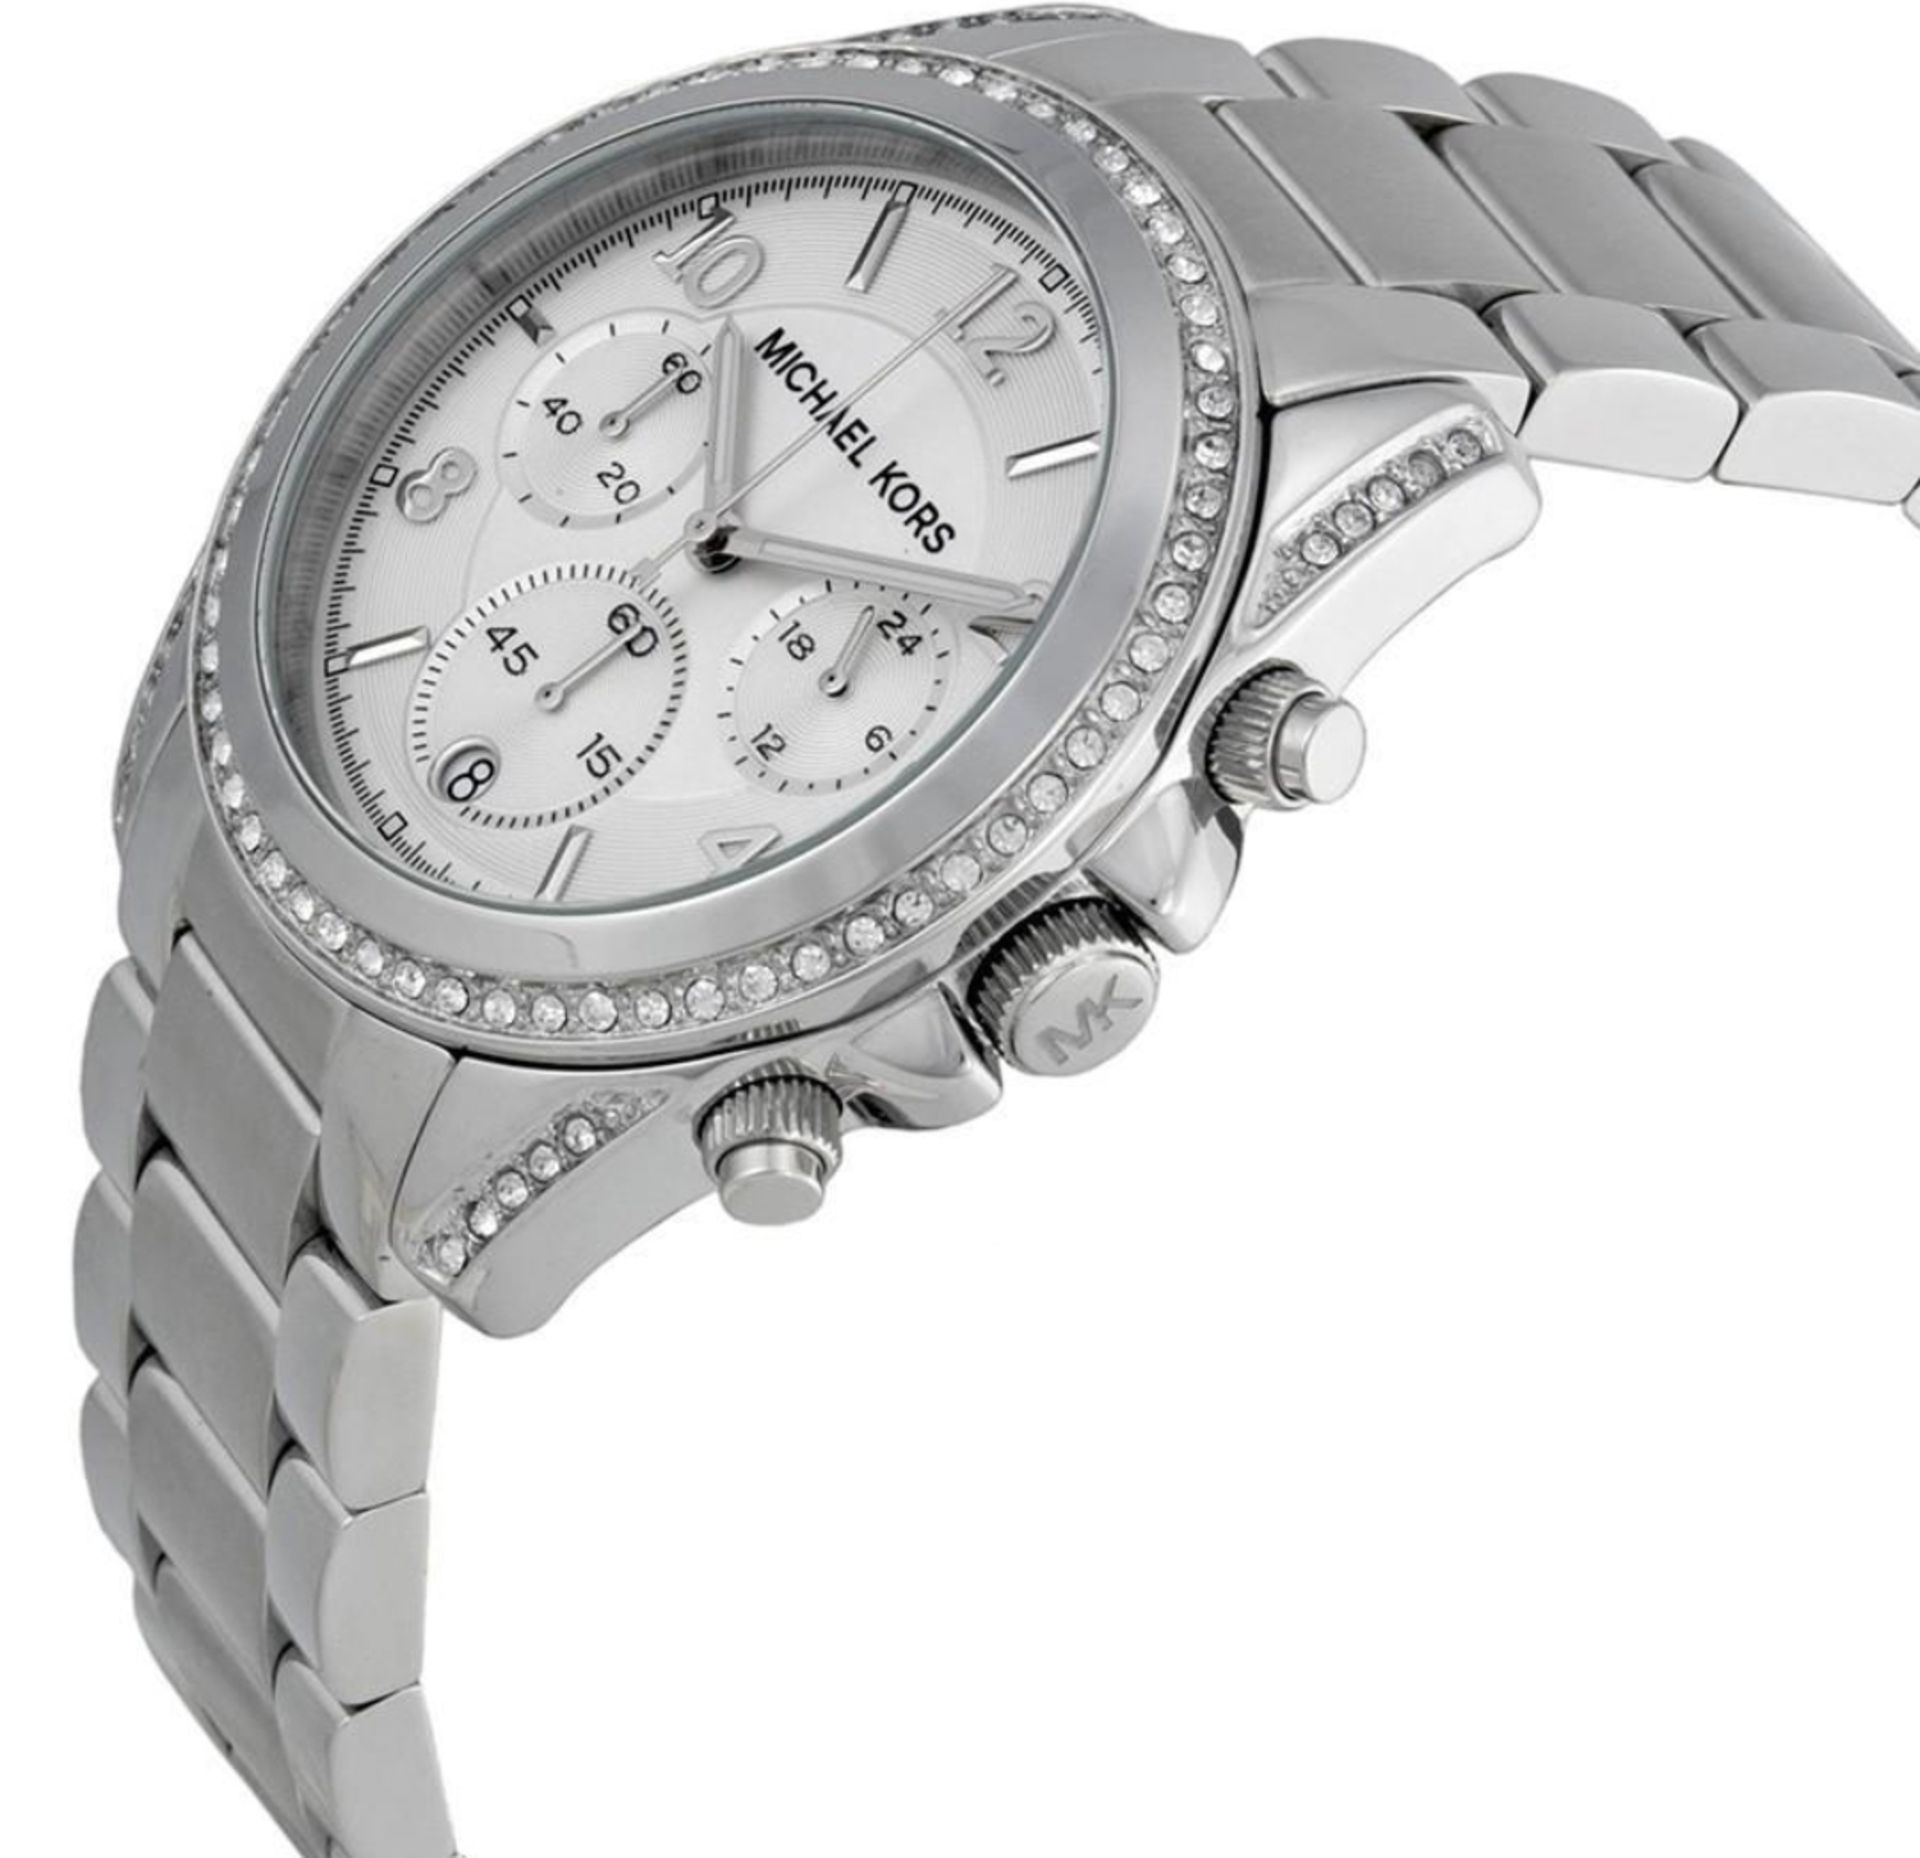 Michael Kors Mk5165 Women's Silver Bracelet Chronograph Quartz Watch - Image 6 of 9